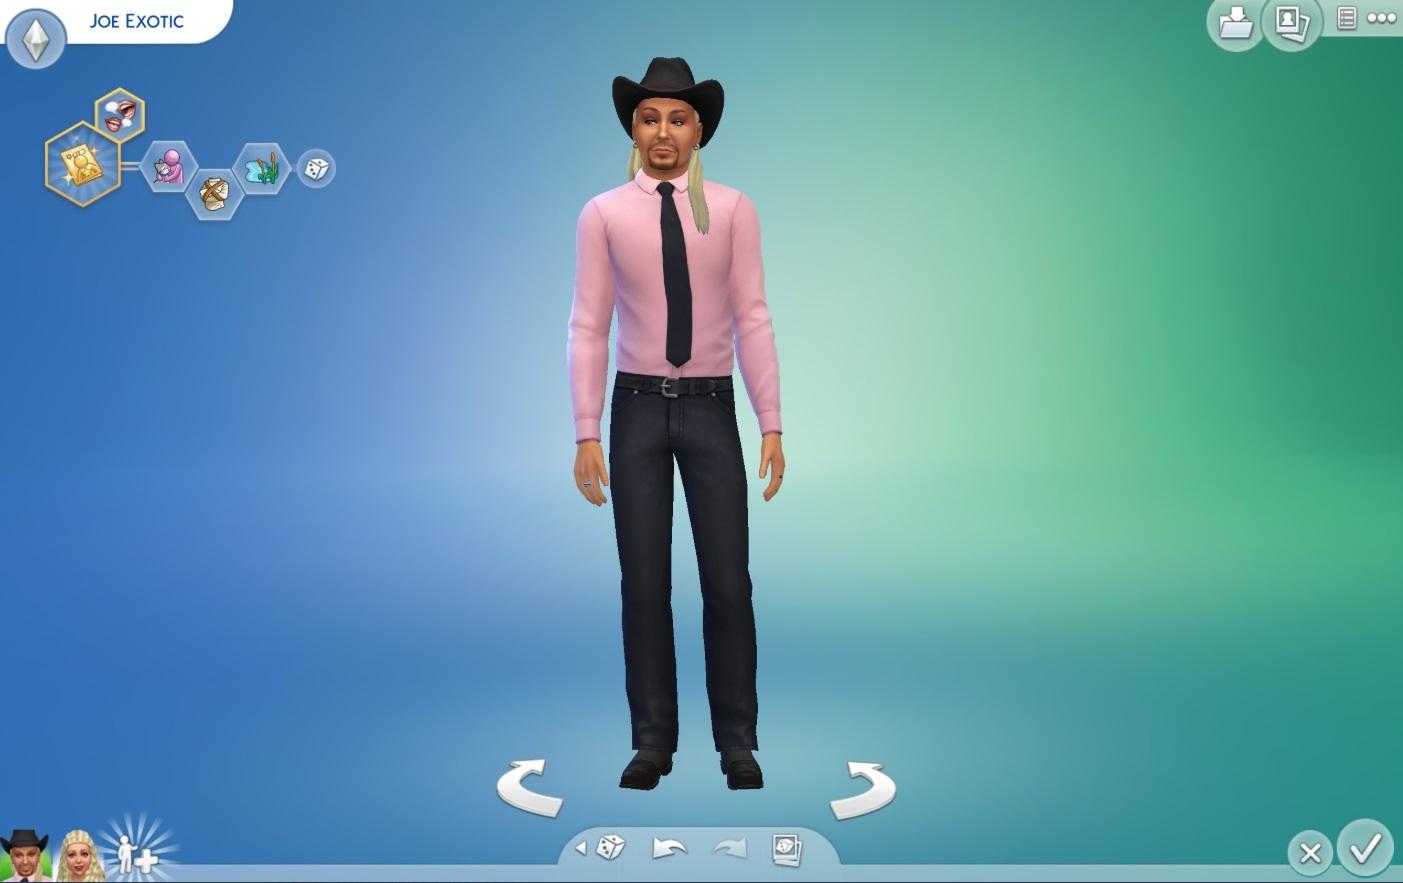 PHOTO Joe Exotic Character In Sims 4